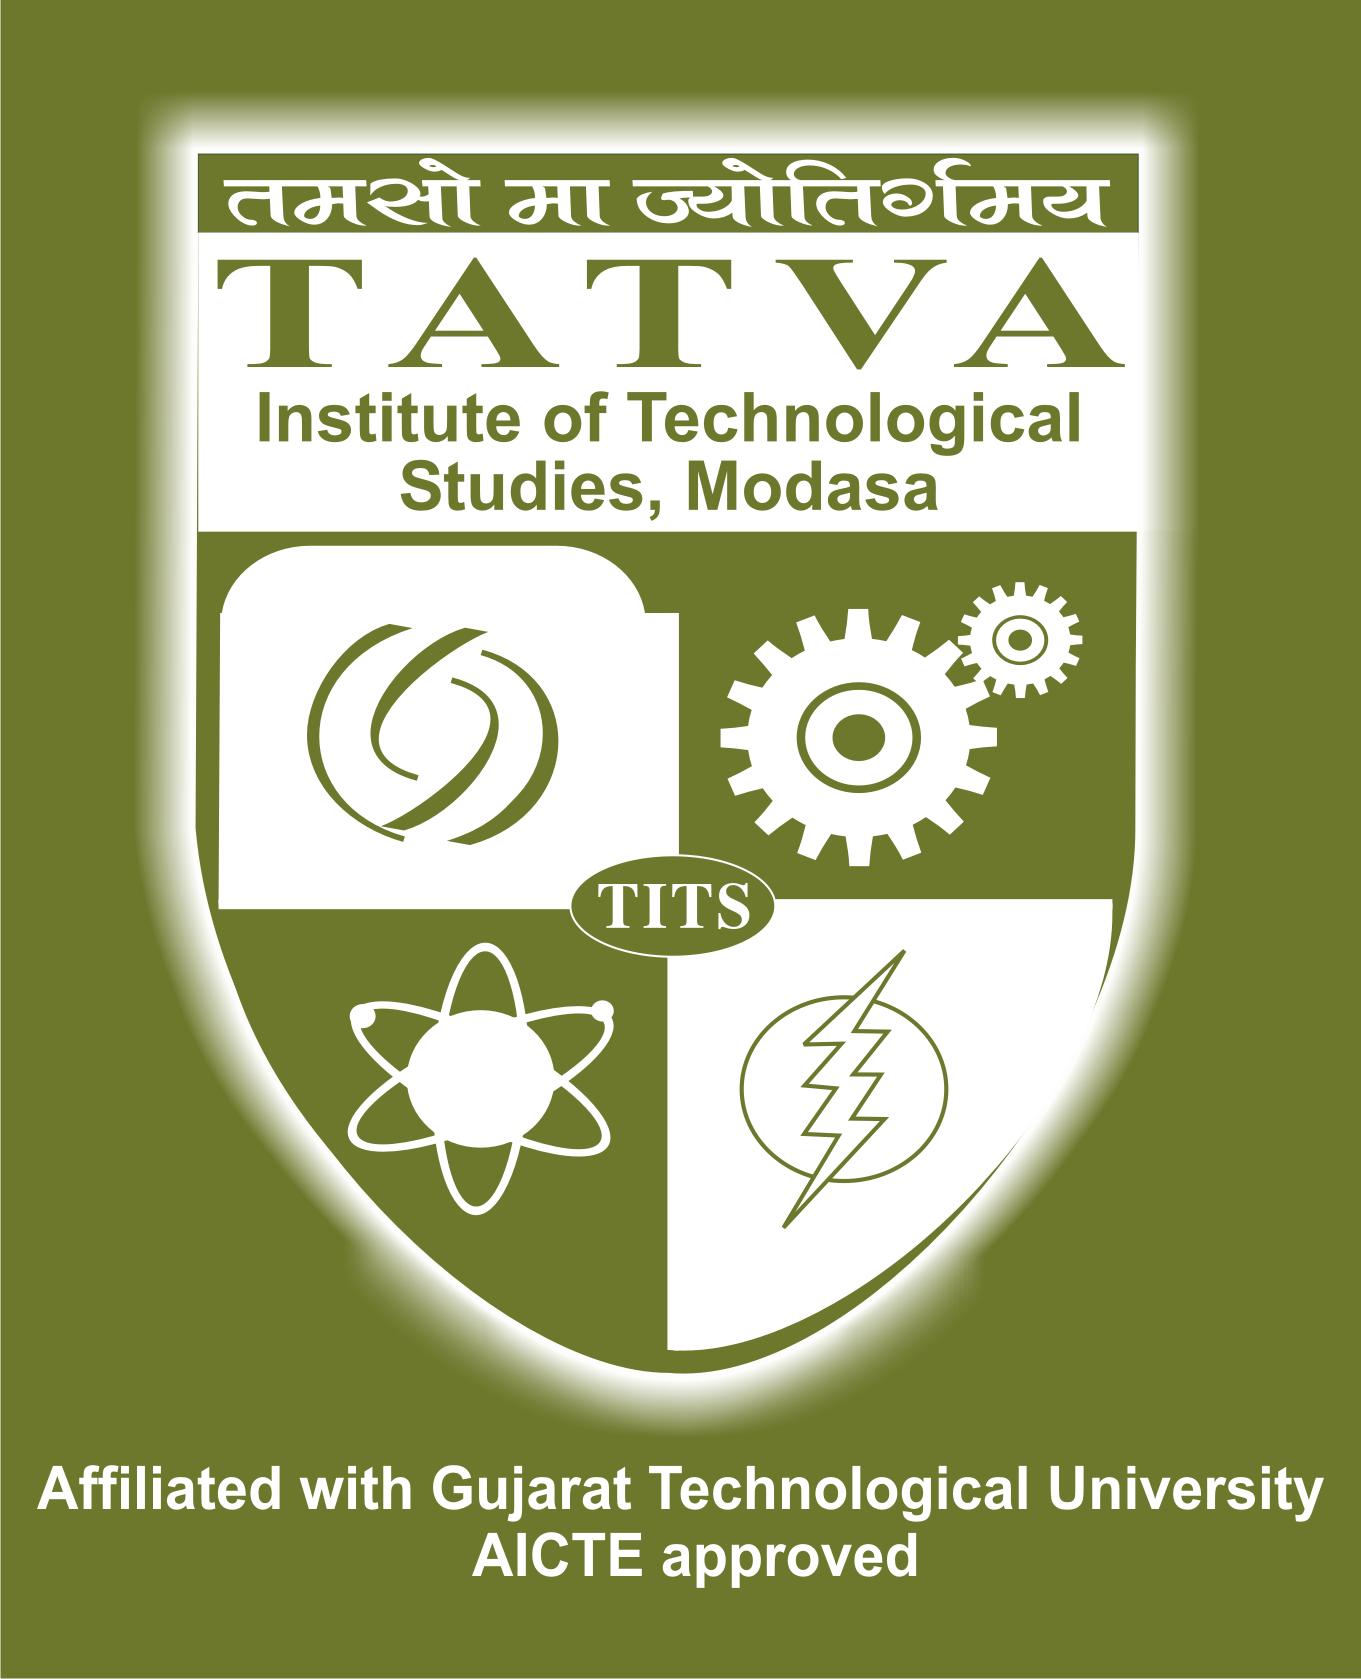 Tatva Institute of Technological Studies